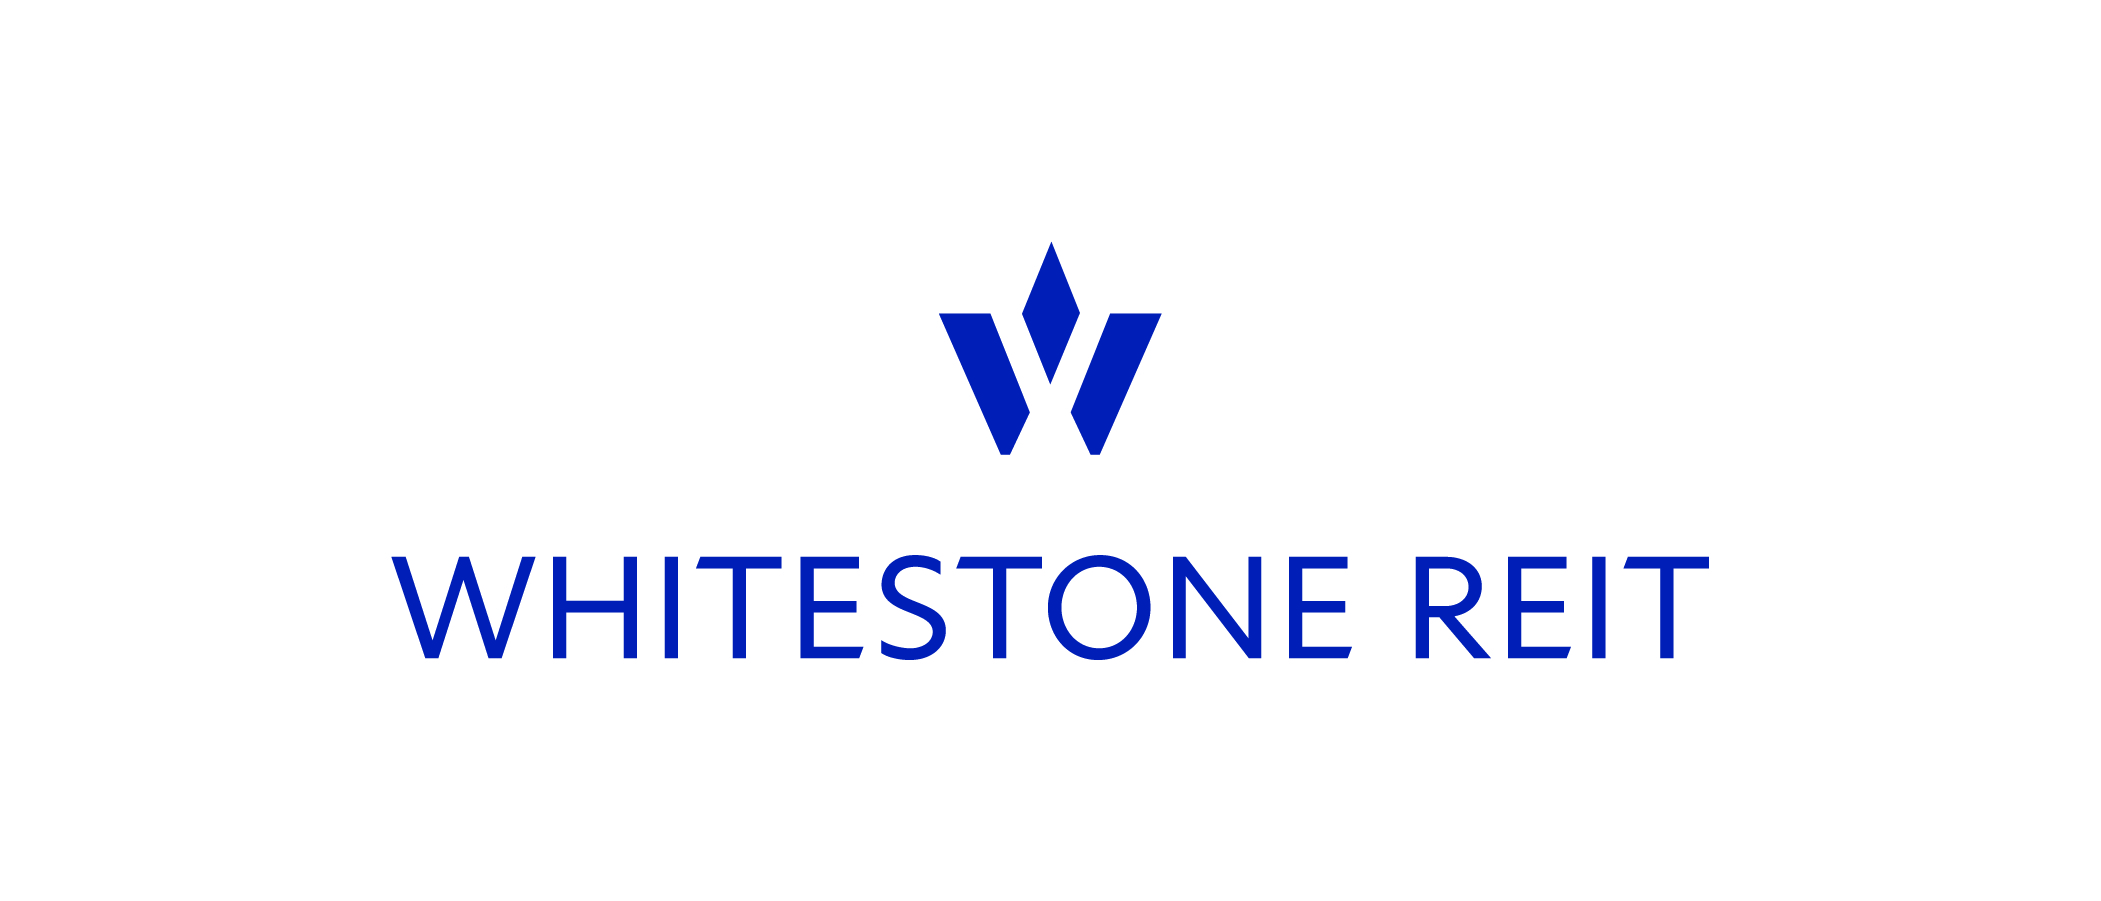 Whitestone REIT log